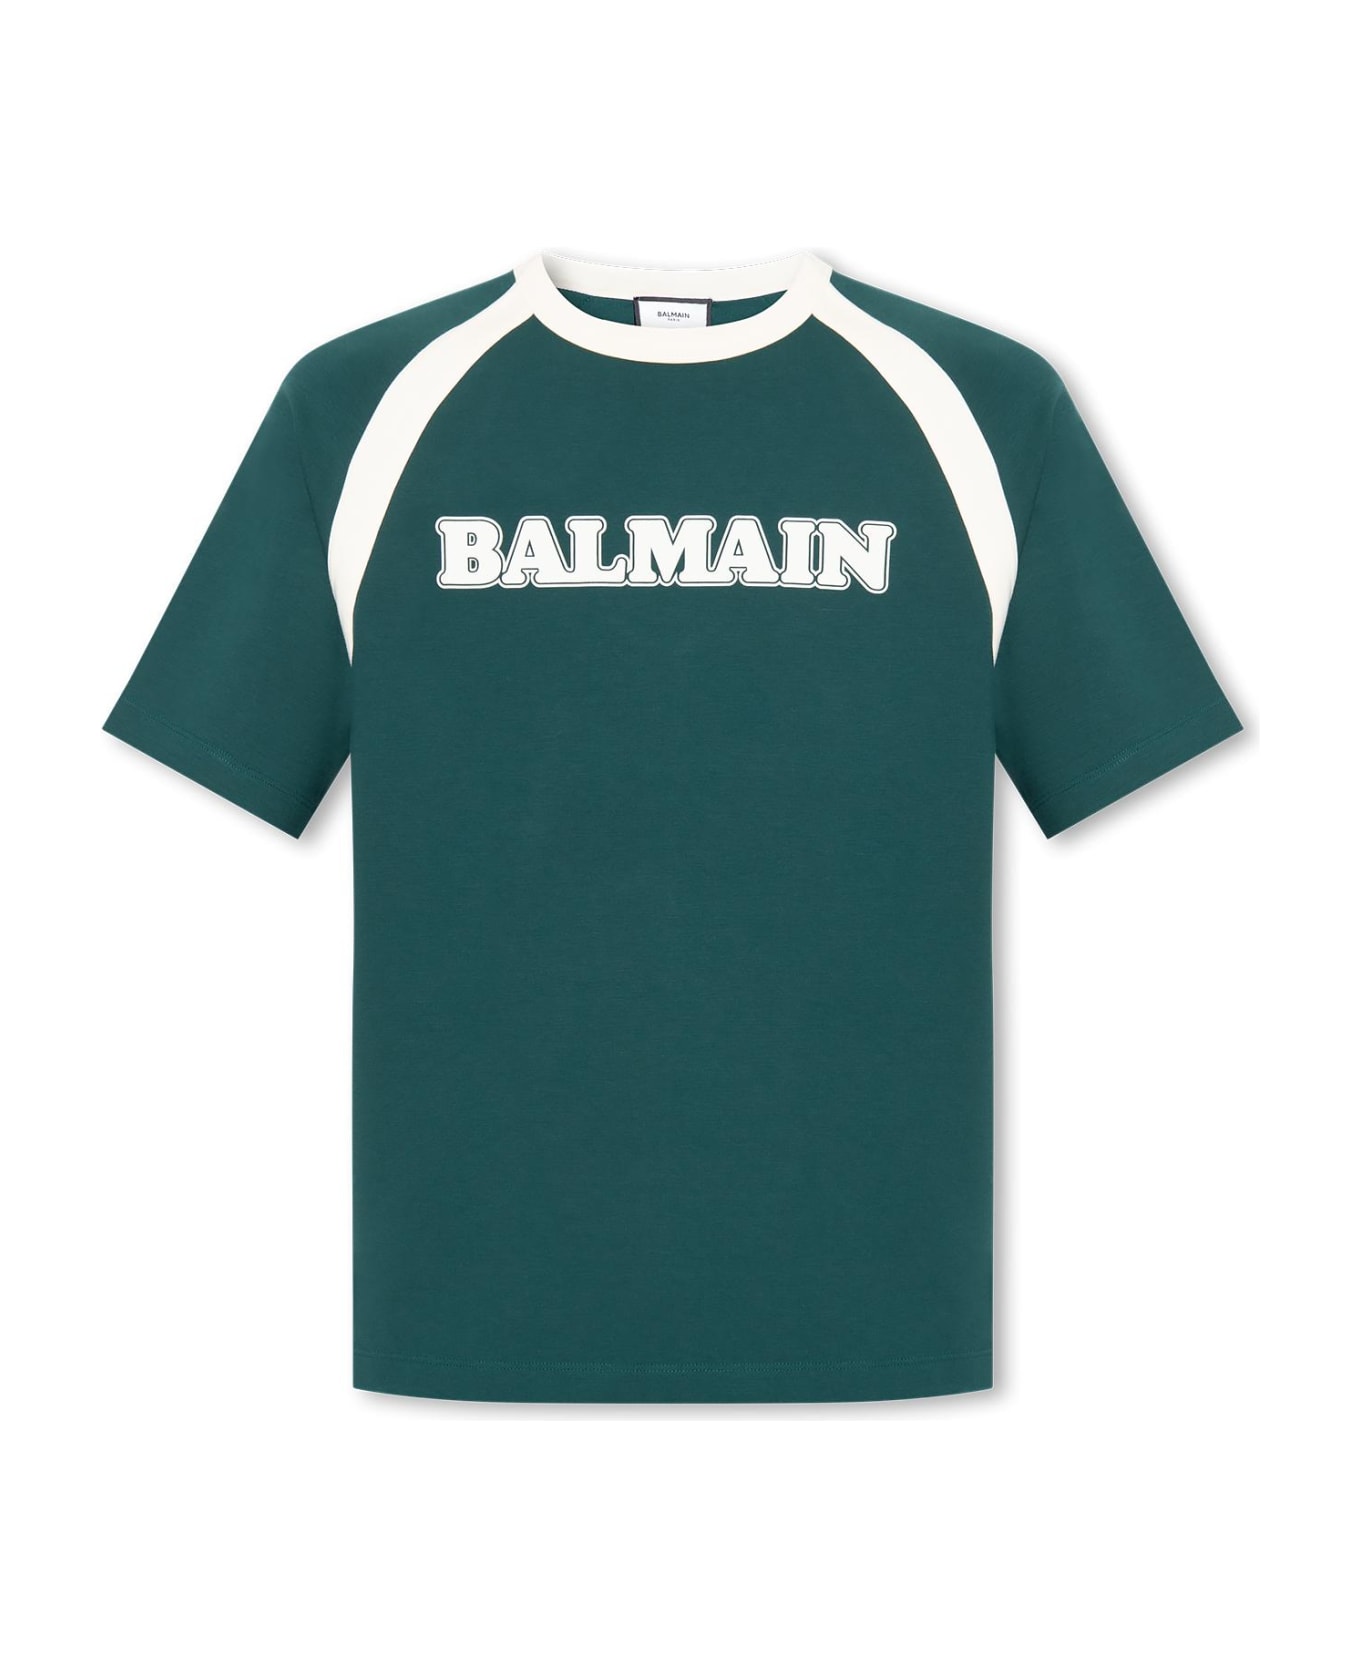 Balmain Printed T-shirt - Vert fonce\creme